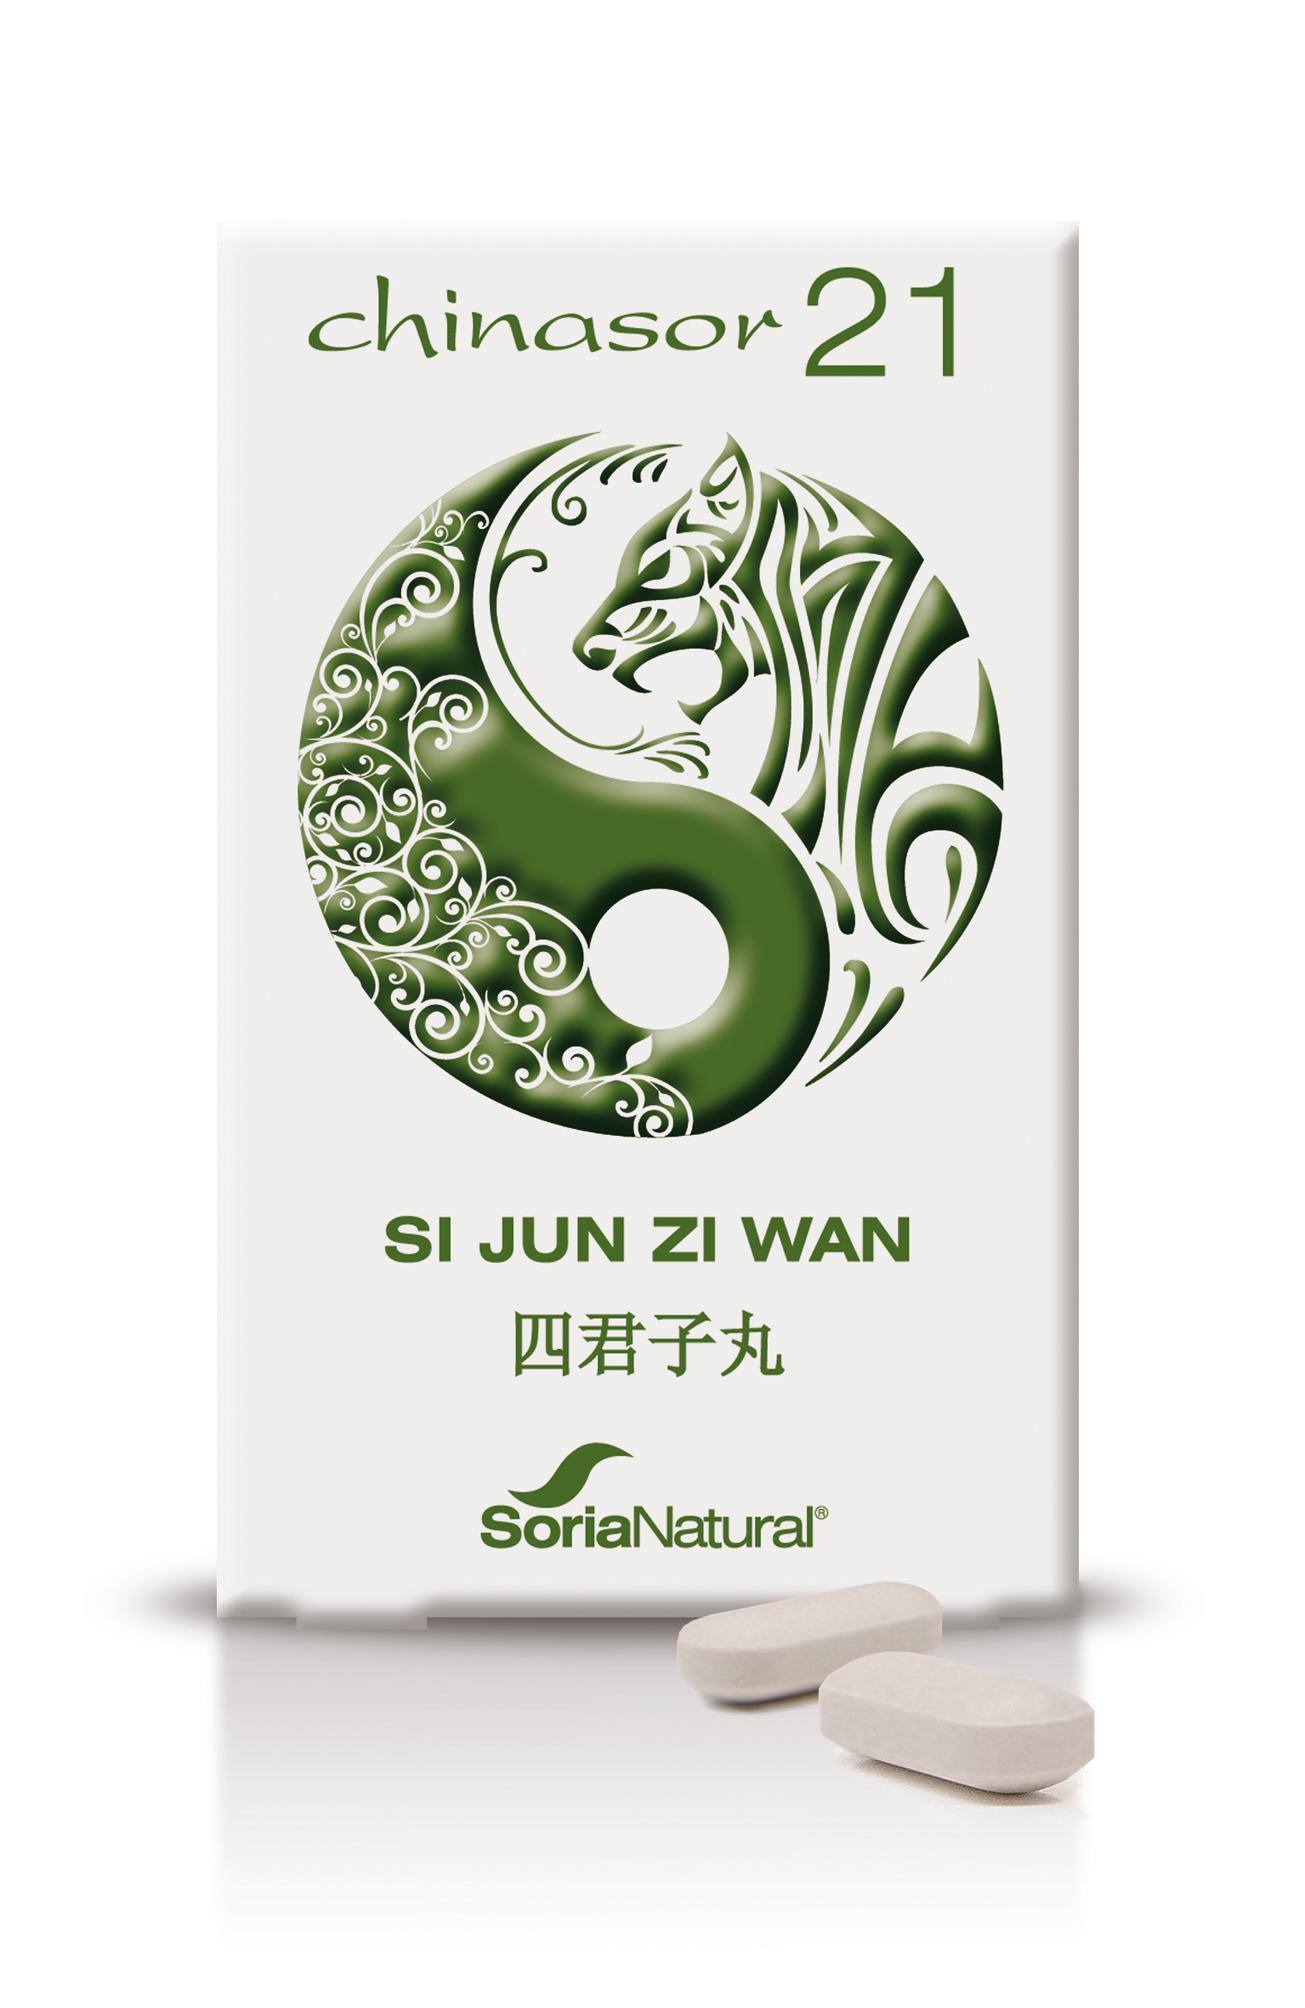 chinasor-21-si-jun-zi-wan-soria-natural